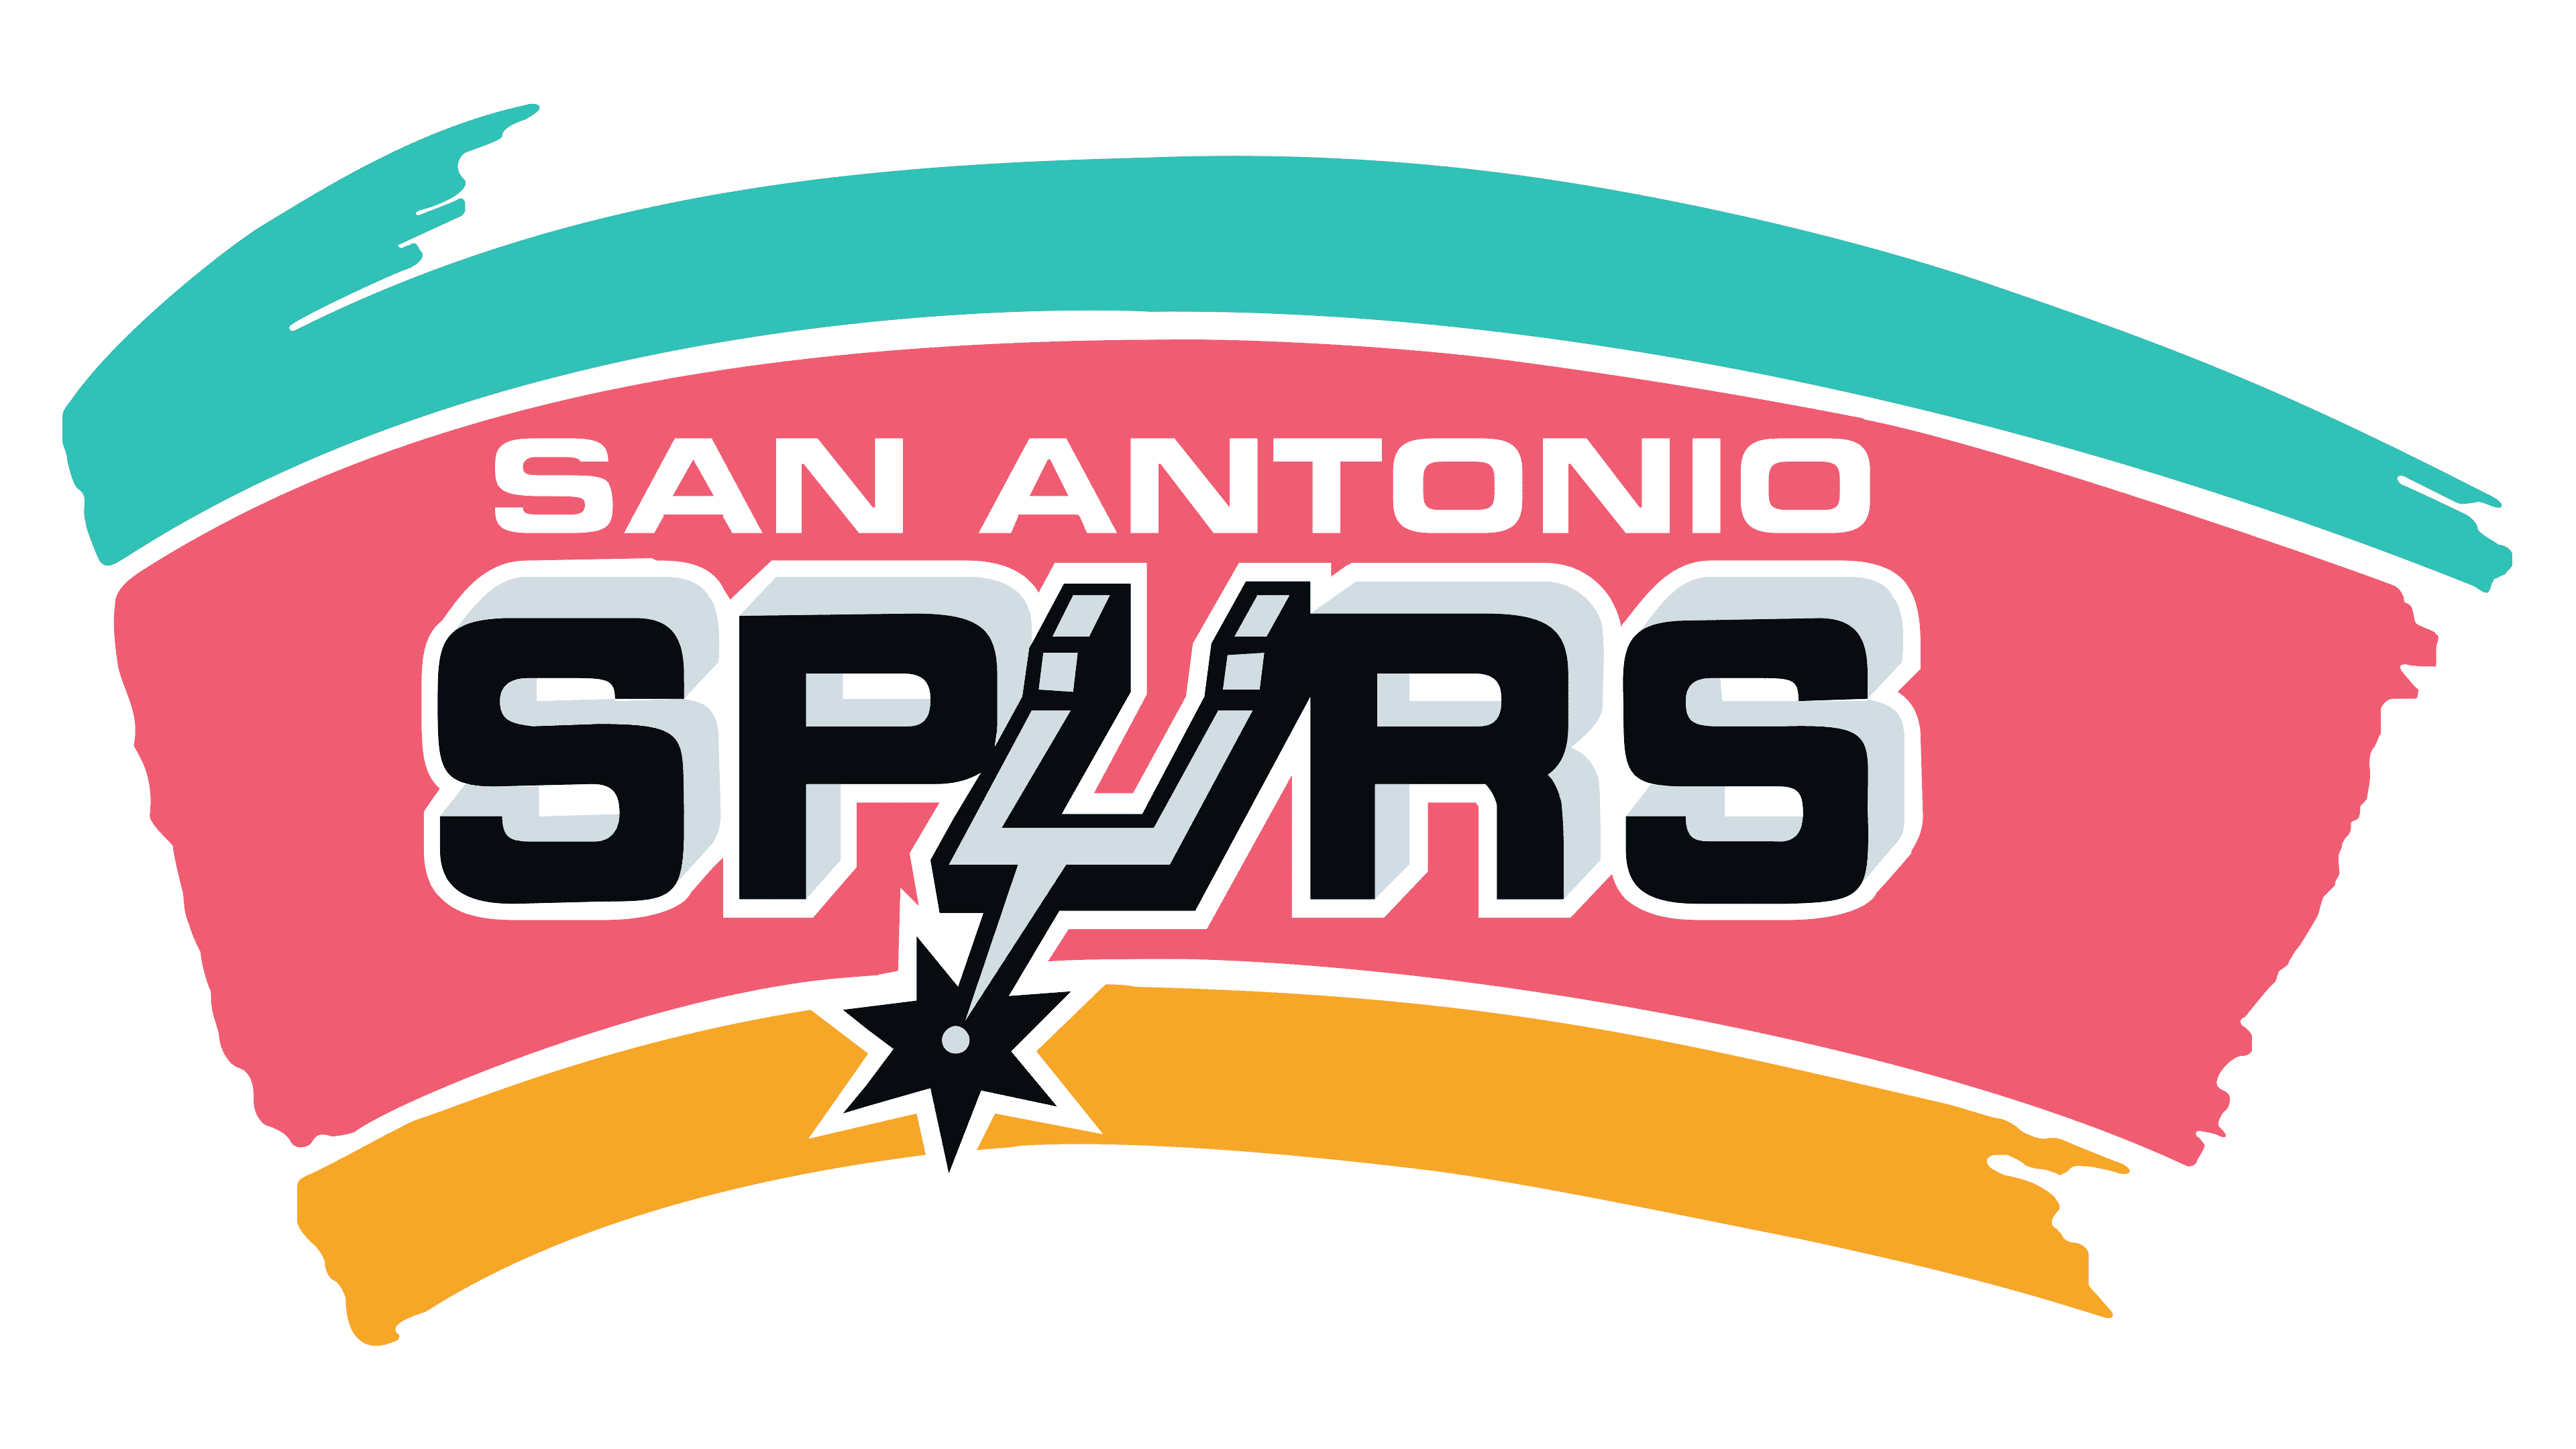 San Antonio Spurs Logo The Most Famous Brands And Company Logos In The World san antonio spurs logo the most